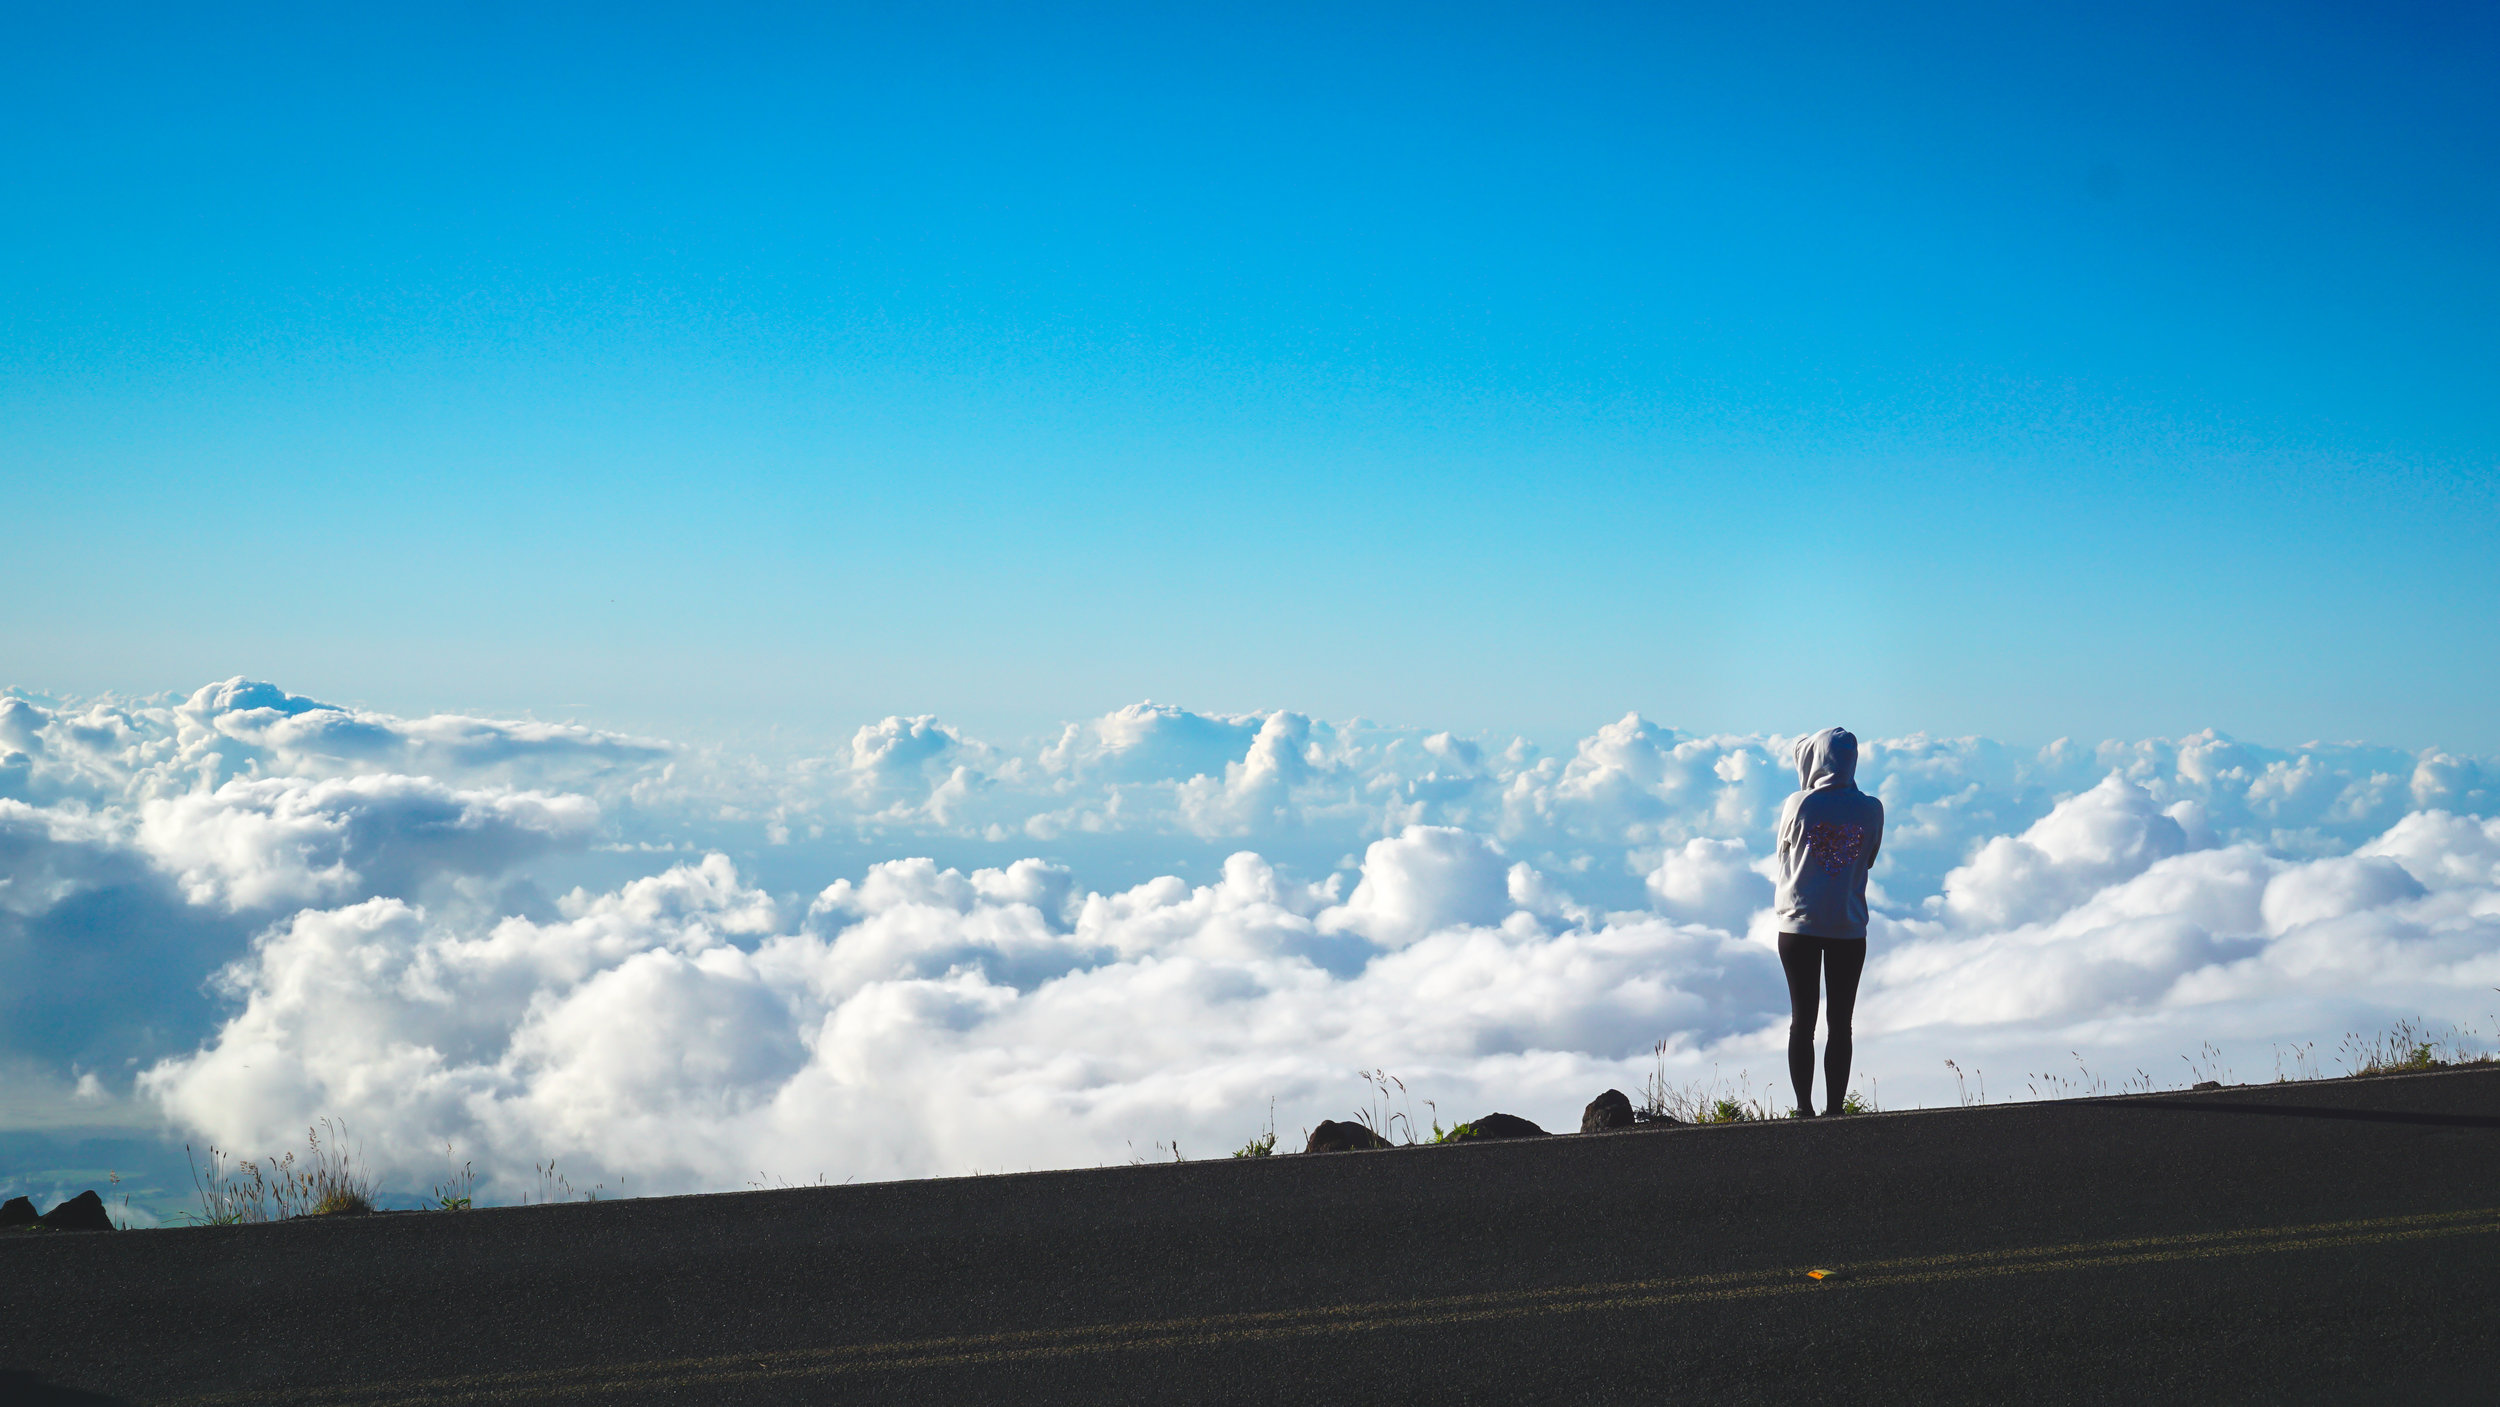 Maui's Haleakala Volcano: Elevation 10,000ft !!